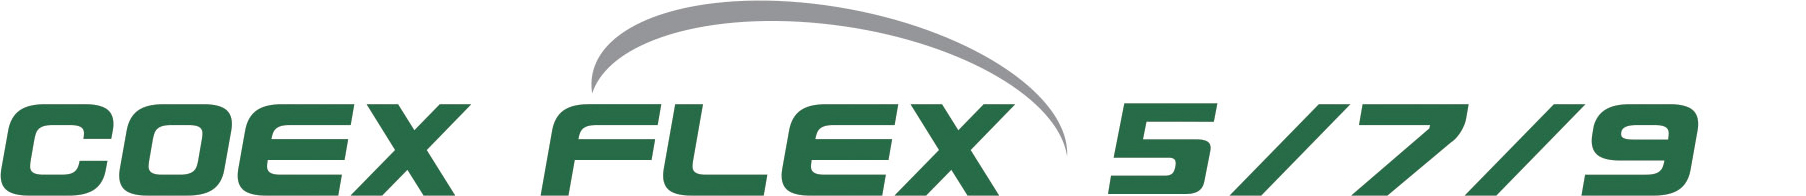 COEX FLEX 5 - 7 - 9